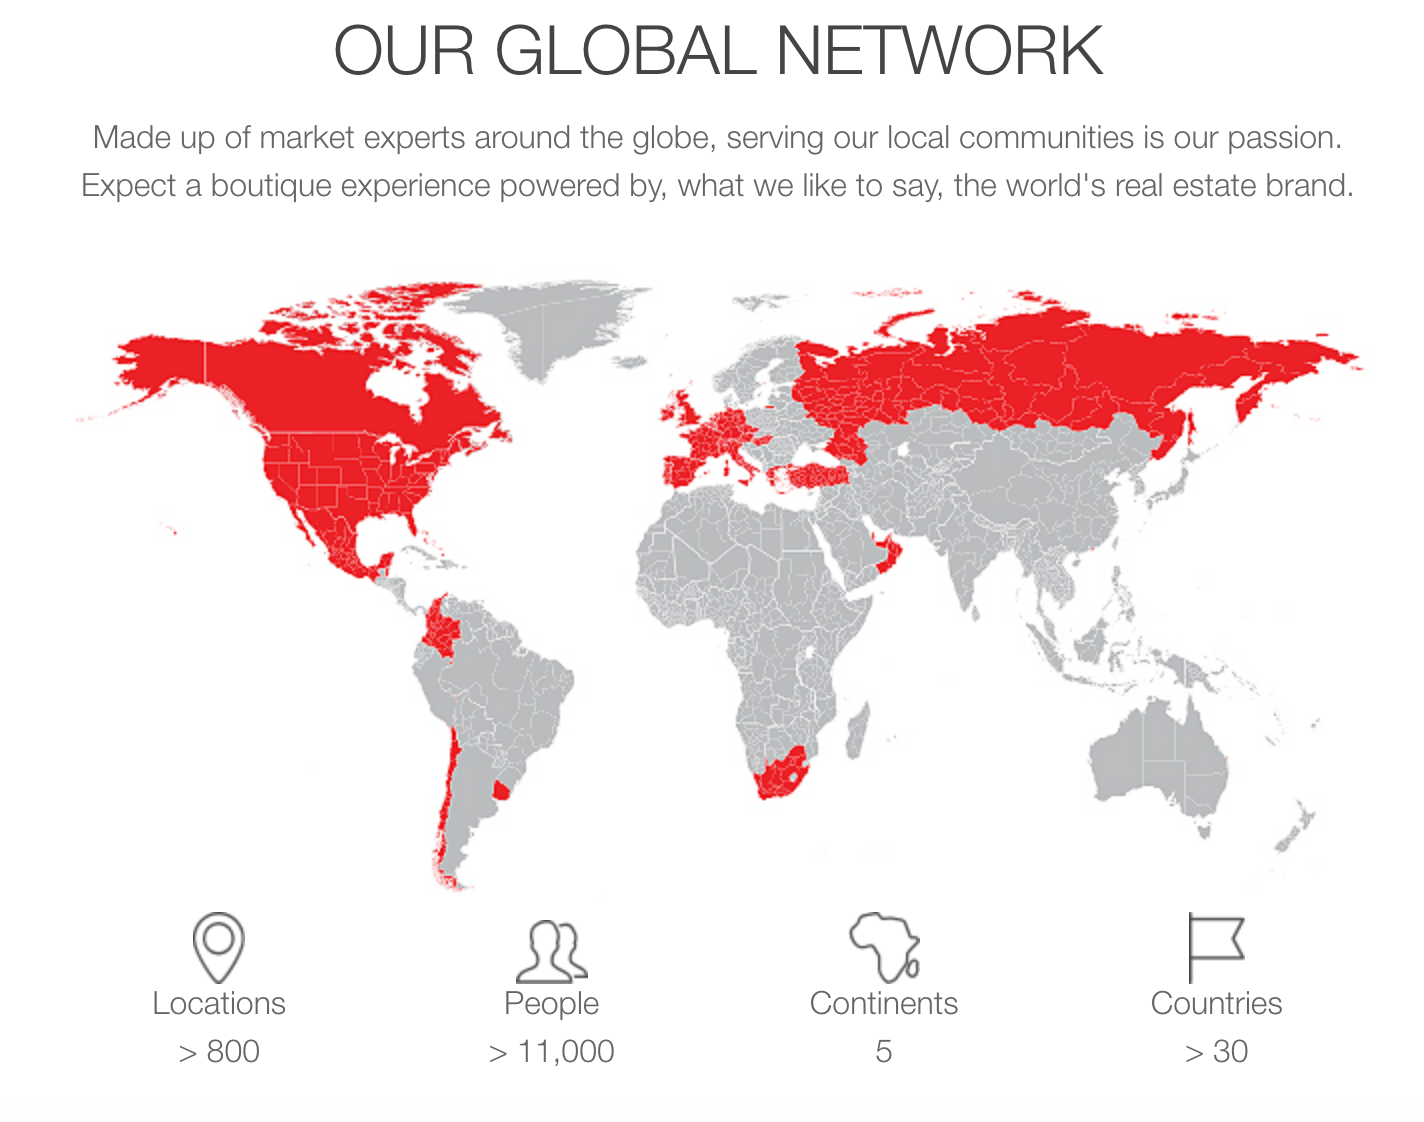 Engel & Völkers Global Network Map of Offices